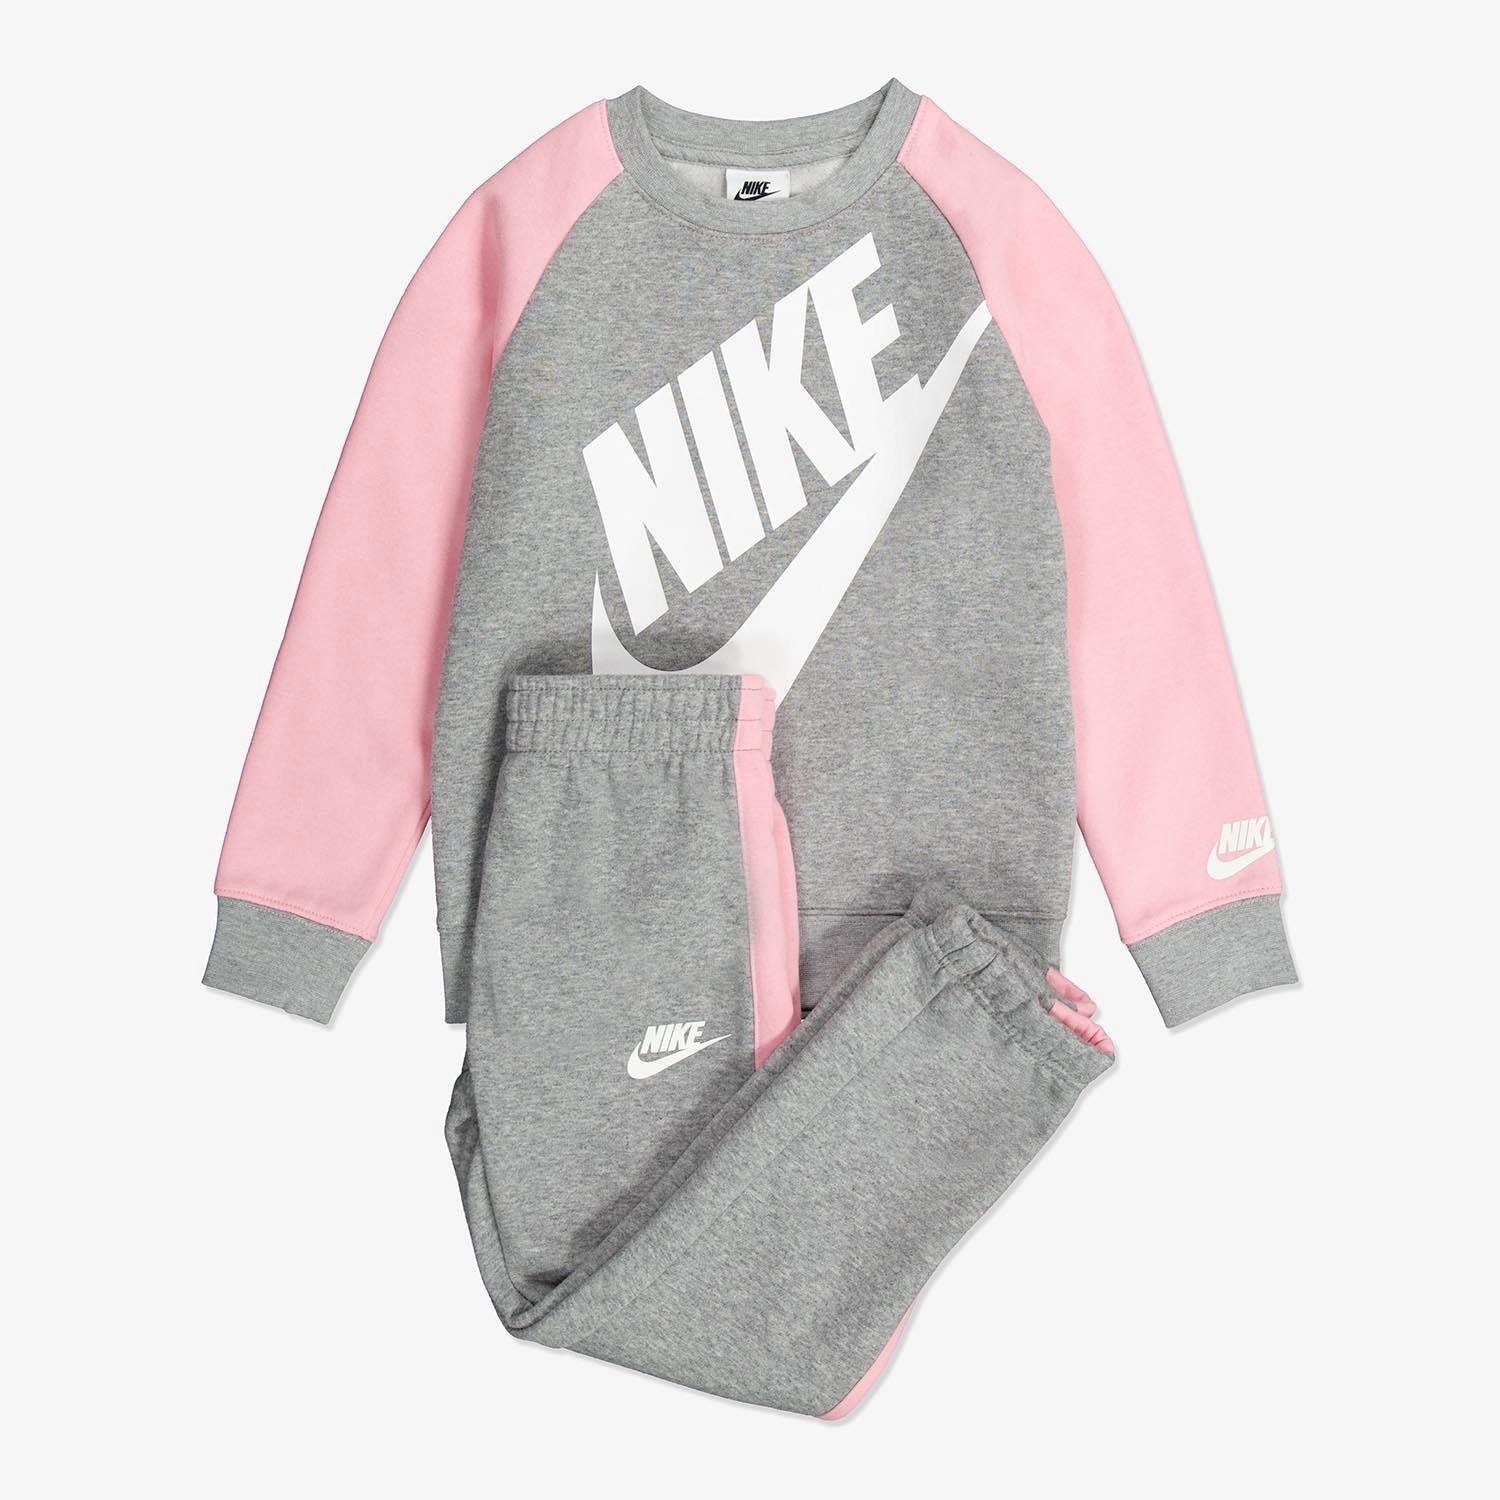 Nike Nike oversized futura crew joggingpak grijs/roze kinderen kinderen